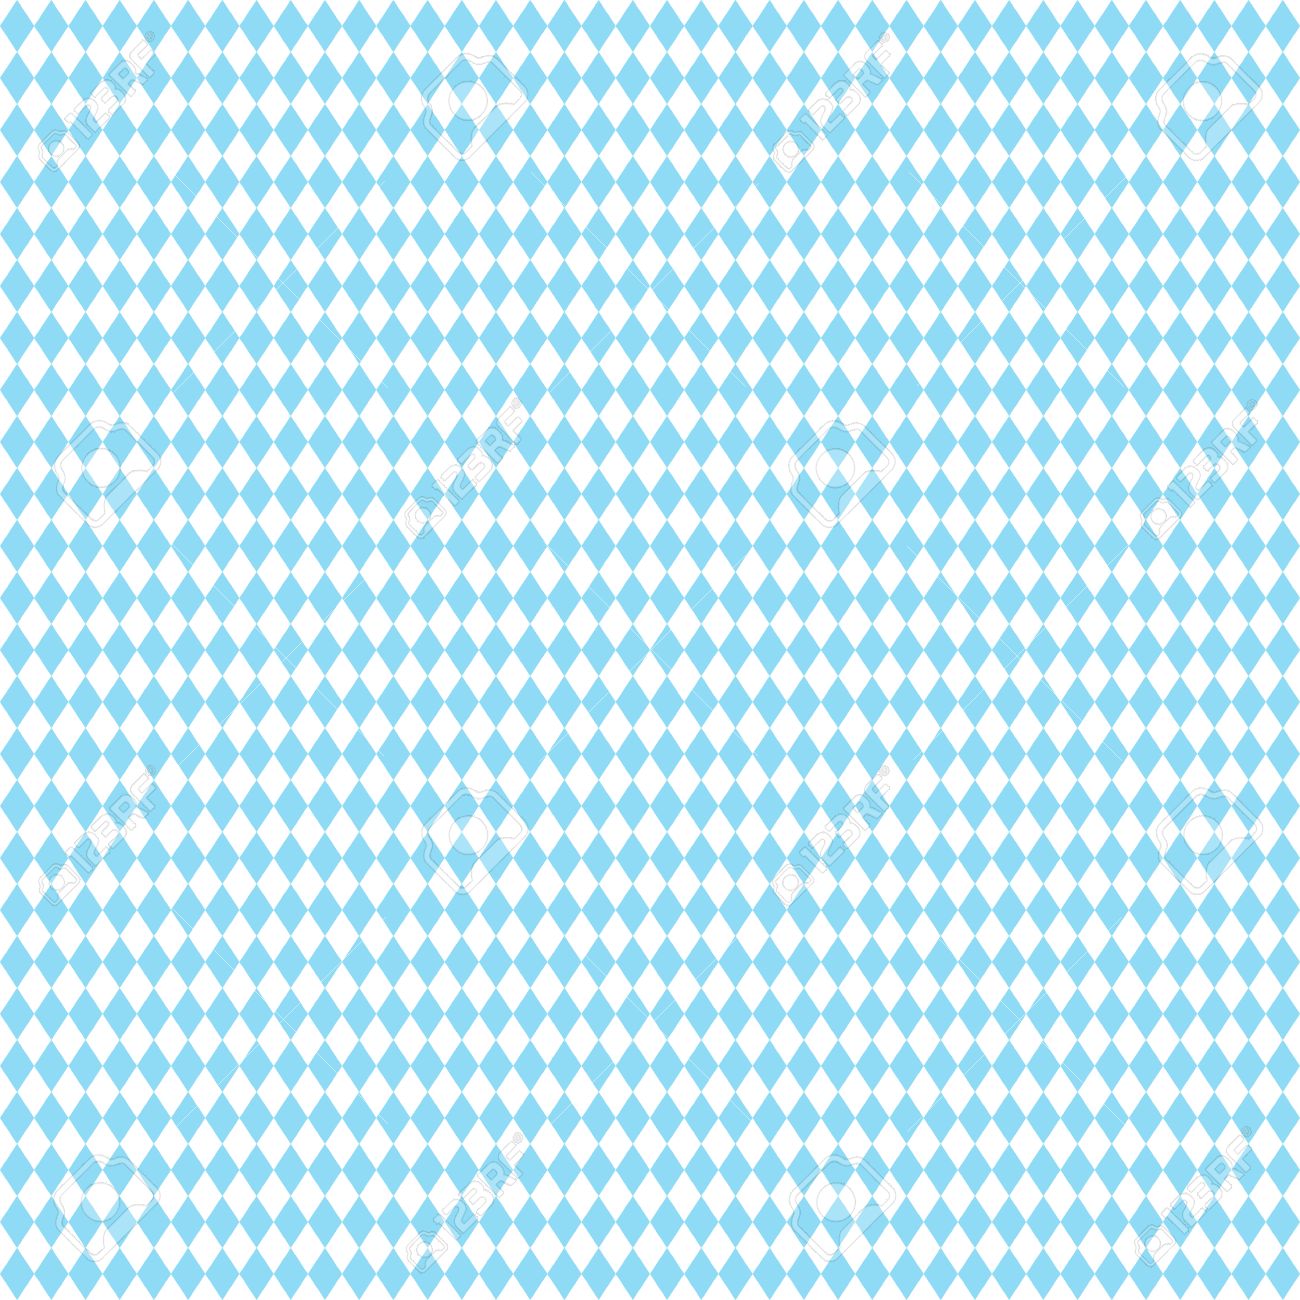 Oktoberfest Background With Seamless Blue White Checkered Pattern